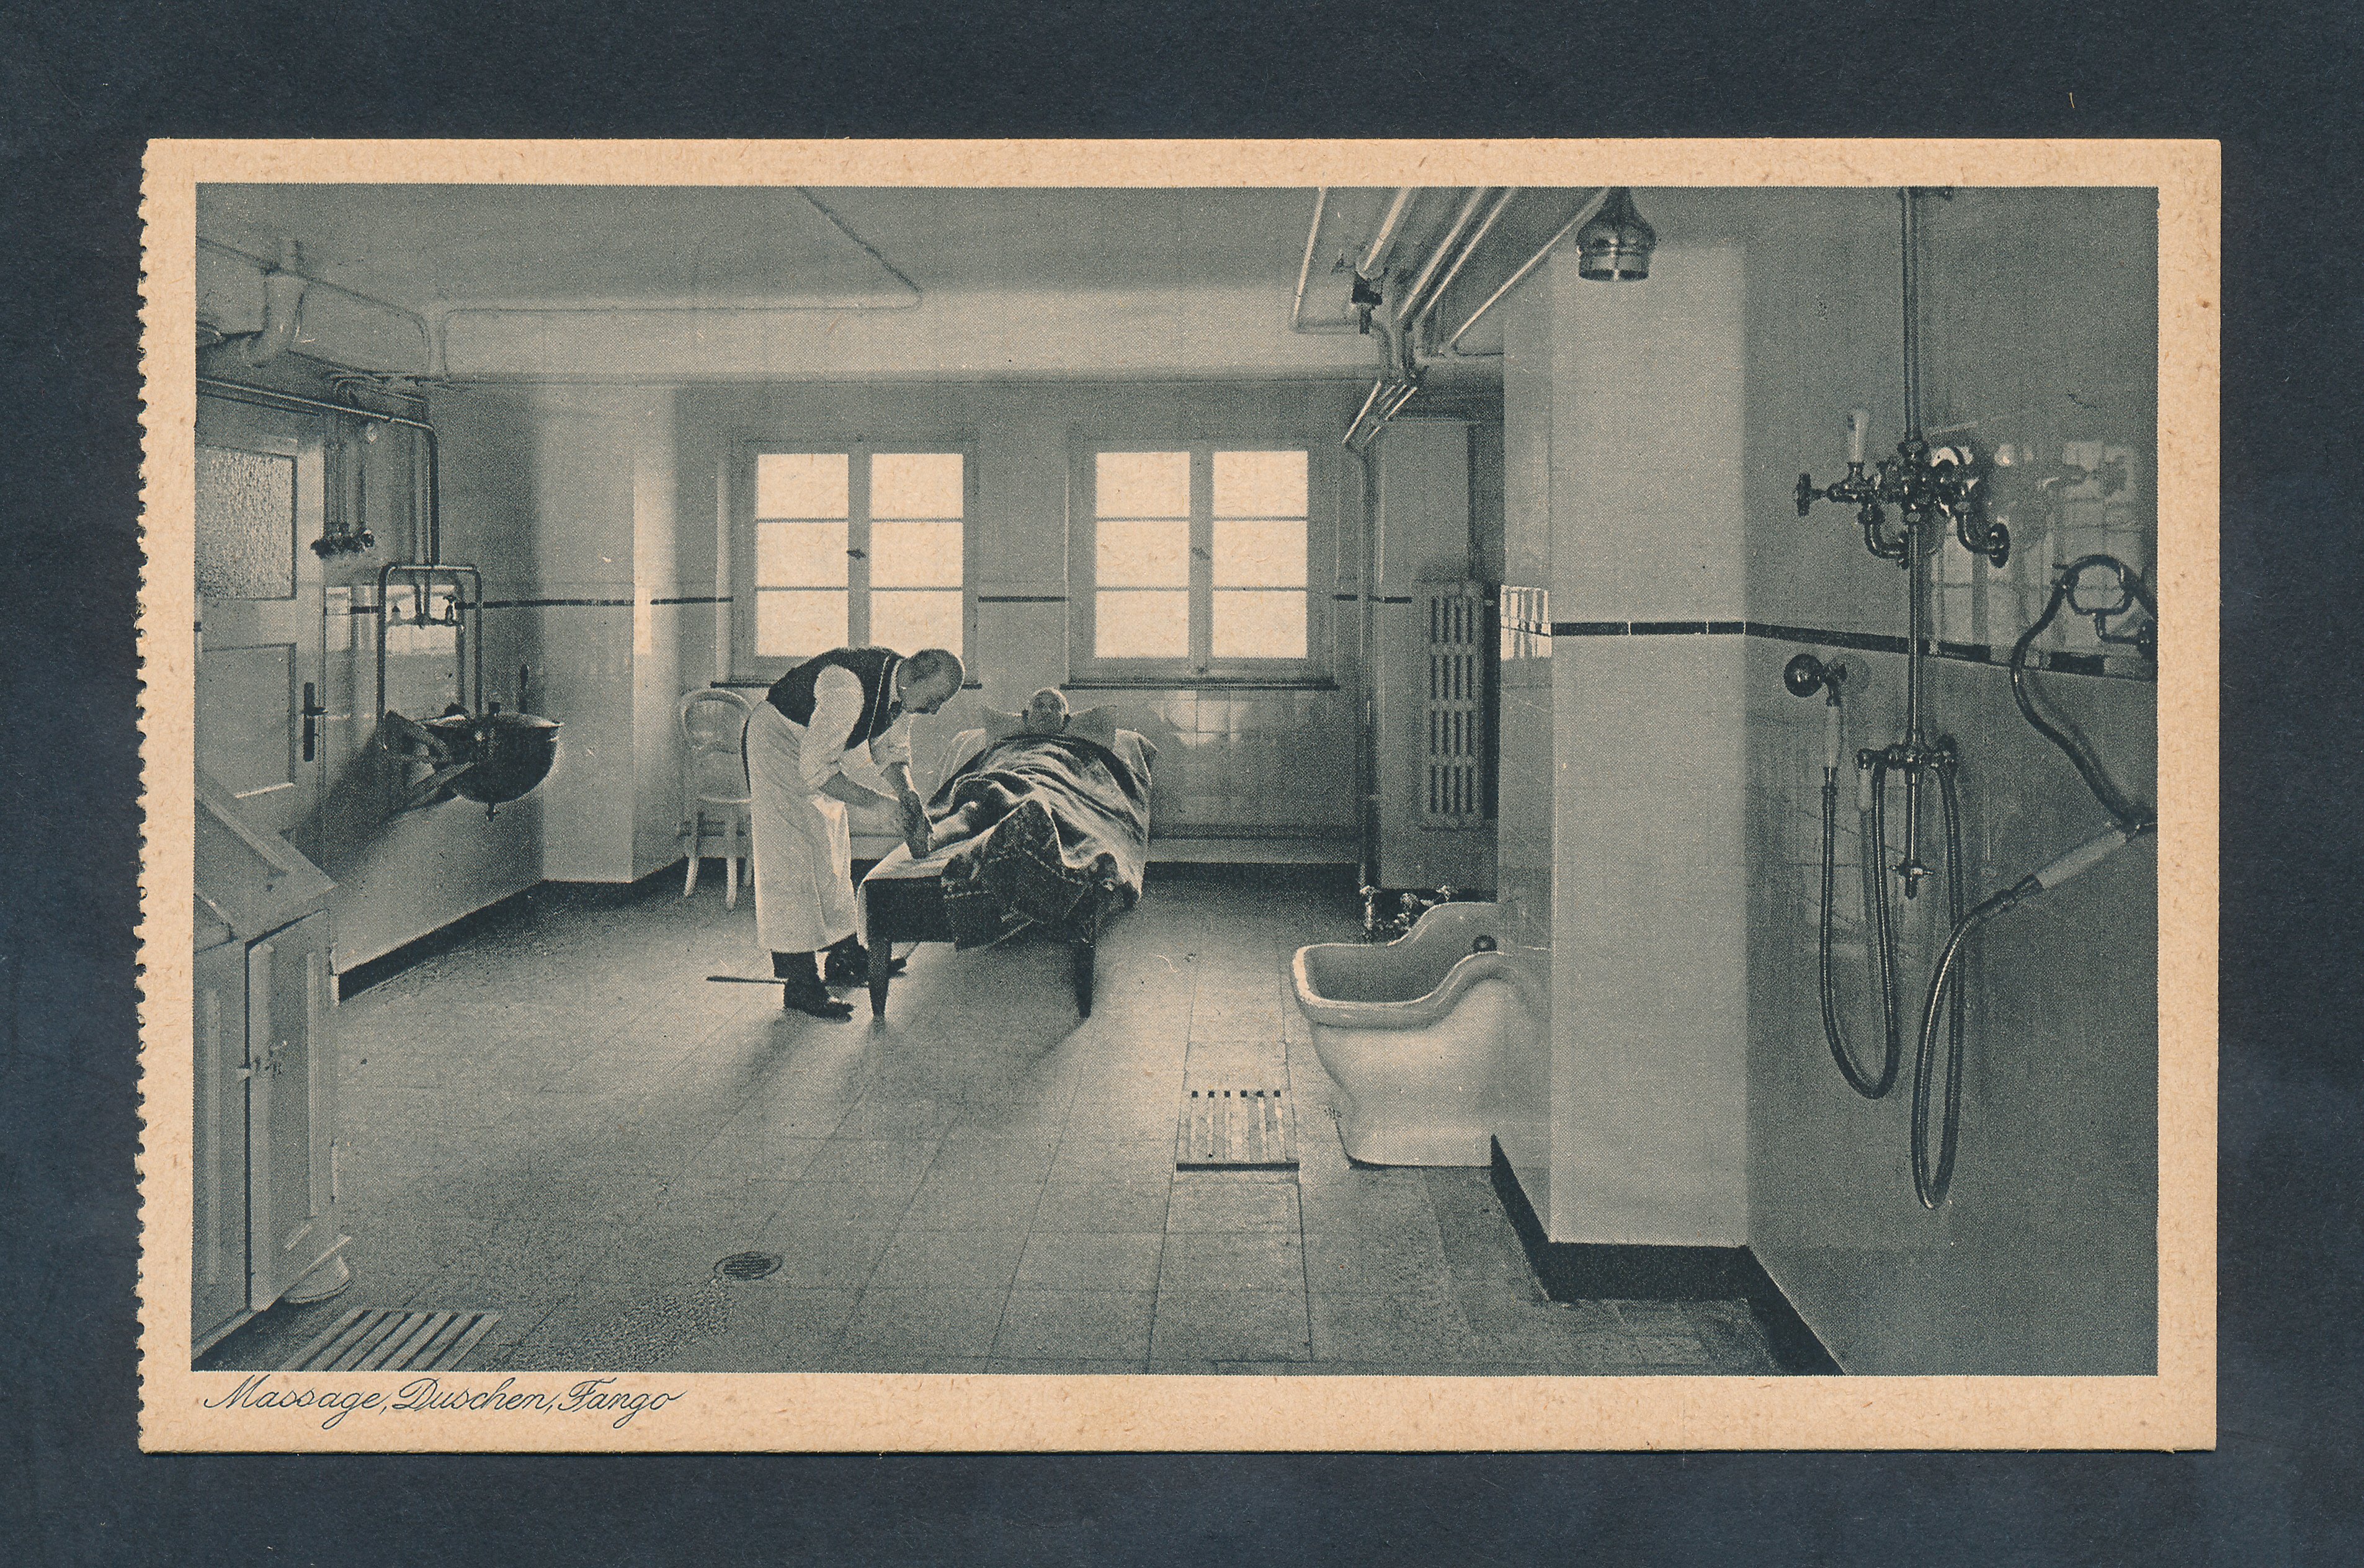 Ansichtskarte: Dreifaltigkeits - Hospital Lippstadt Massage, Dusche, Fango (Stadtmuseum Lippstadt CC BY-NC-SA)